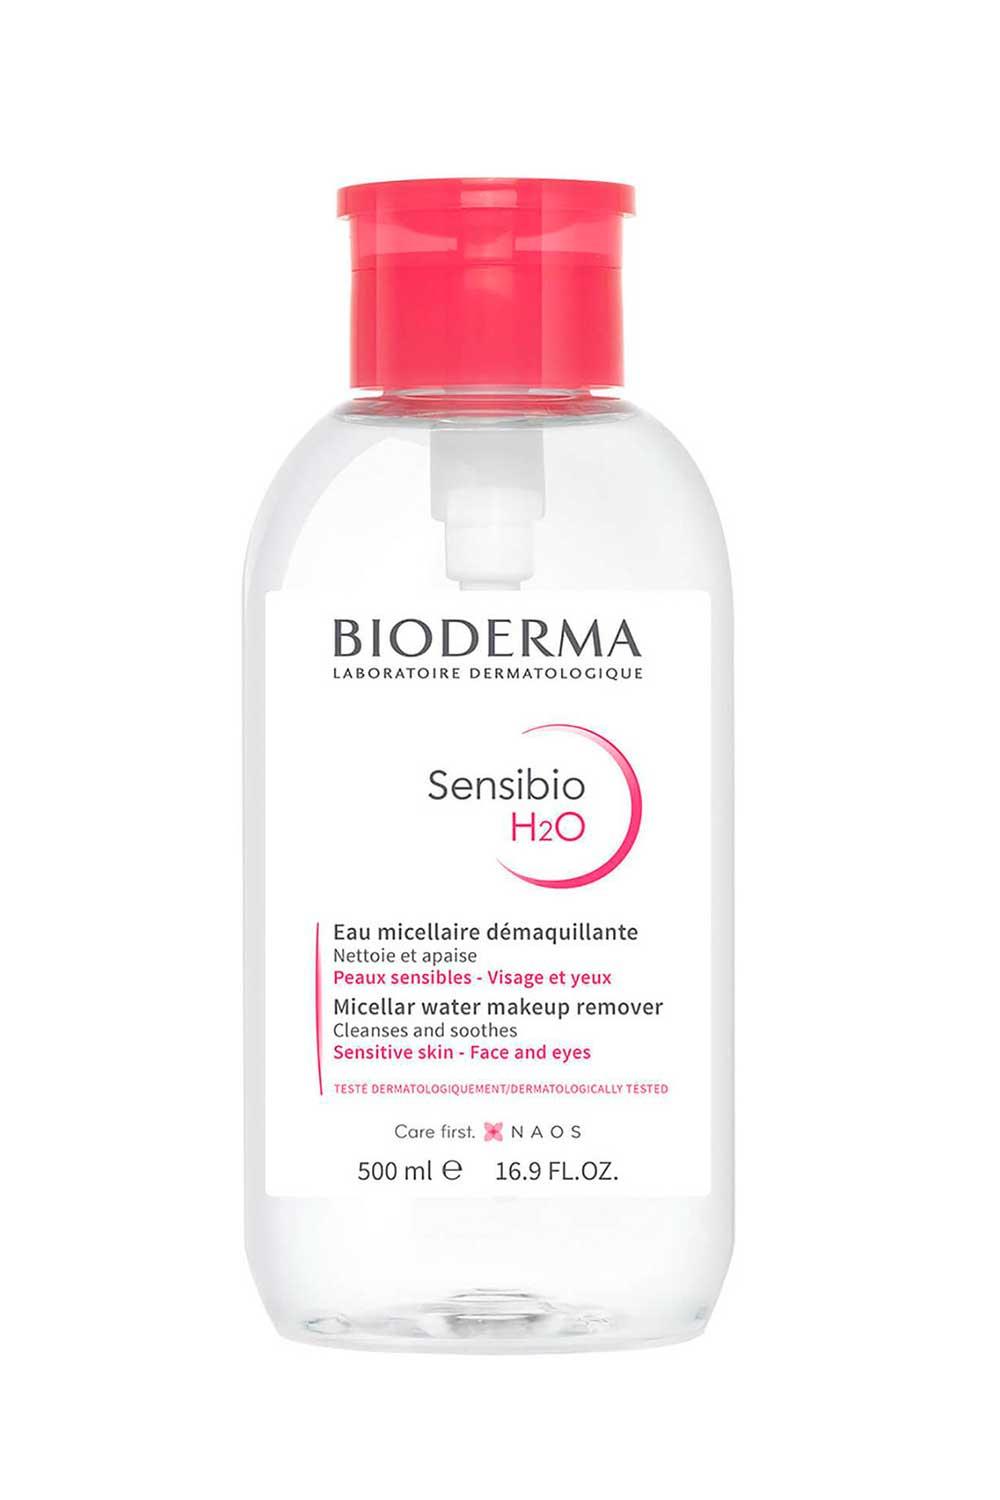 Bioderma7. Solución Micelar Sensibio H2o Piel Sensible, Bioderma